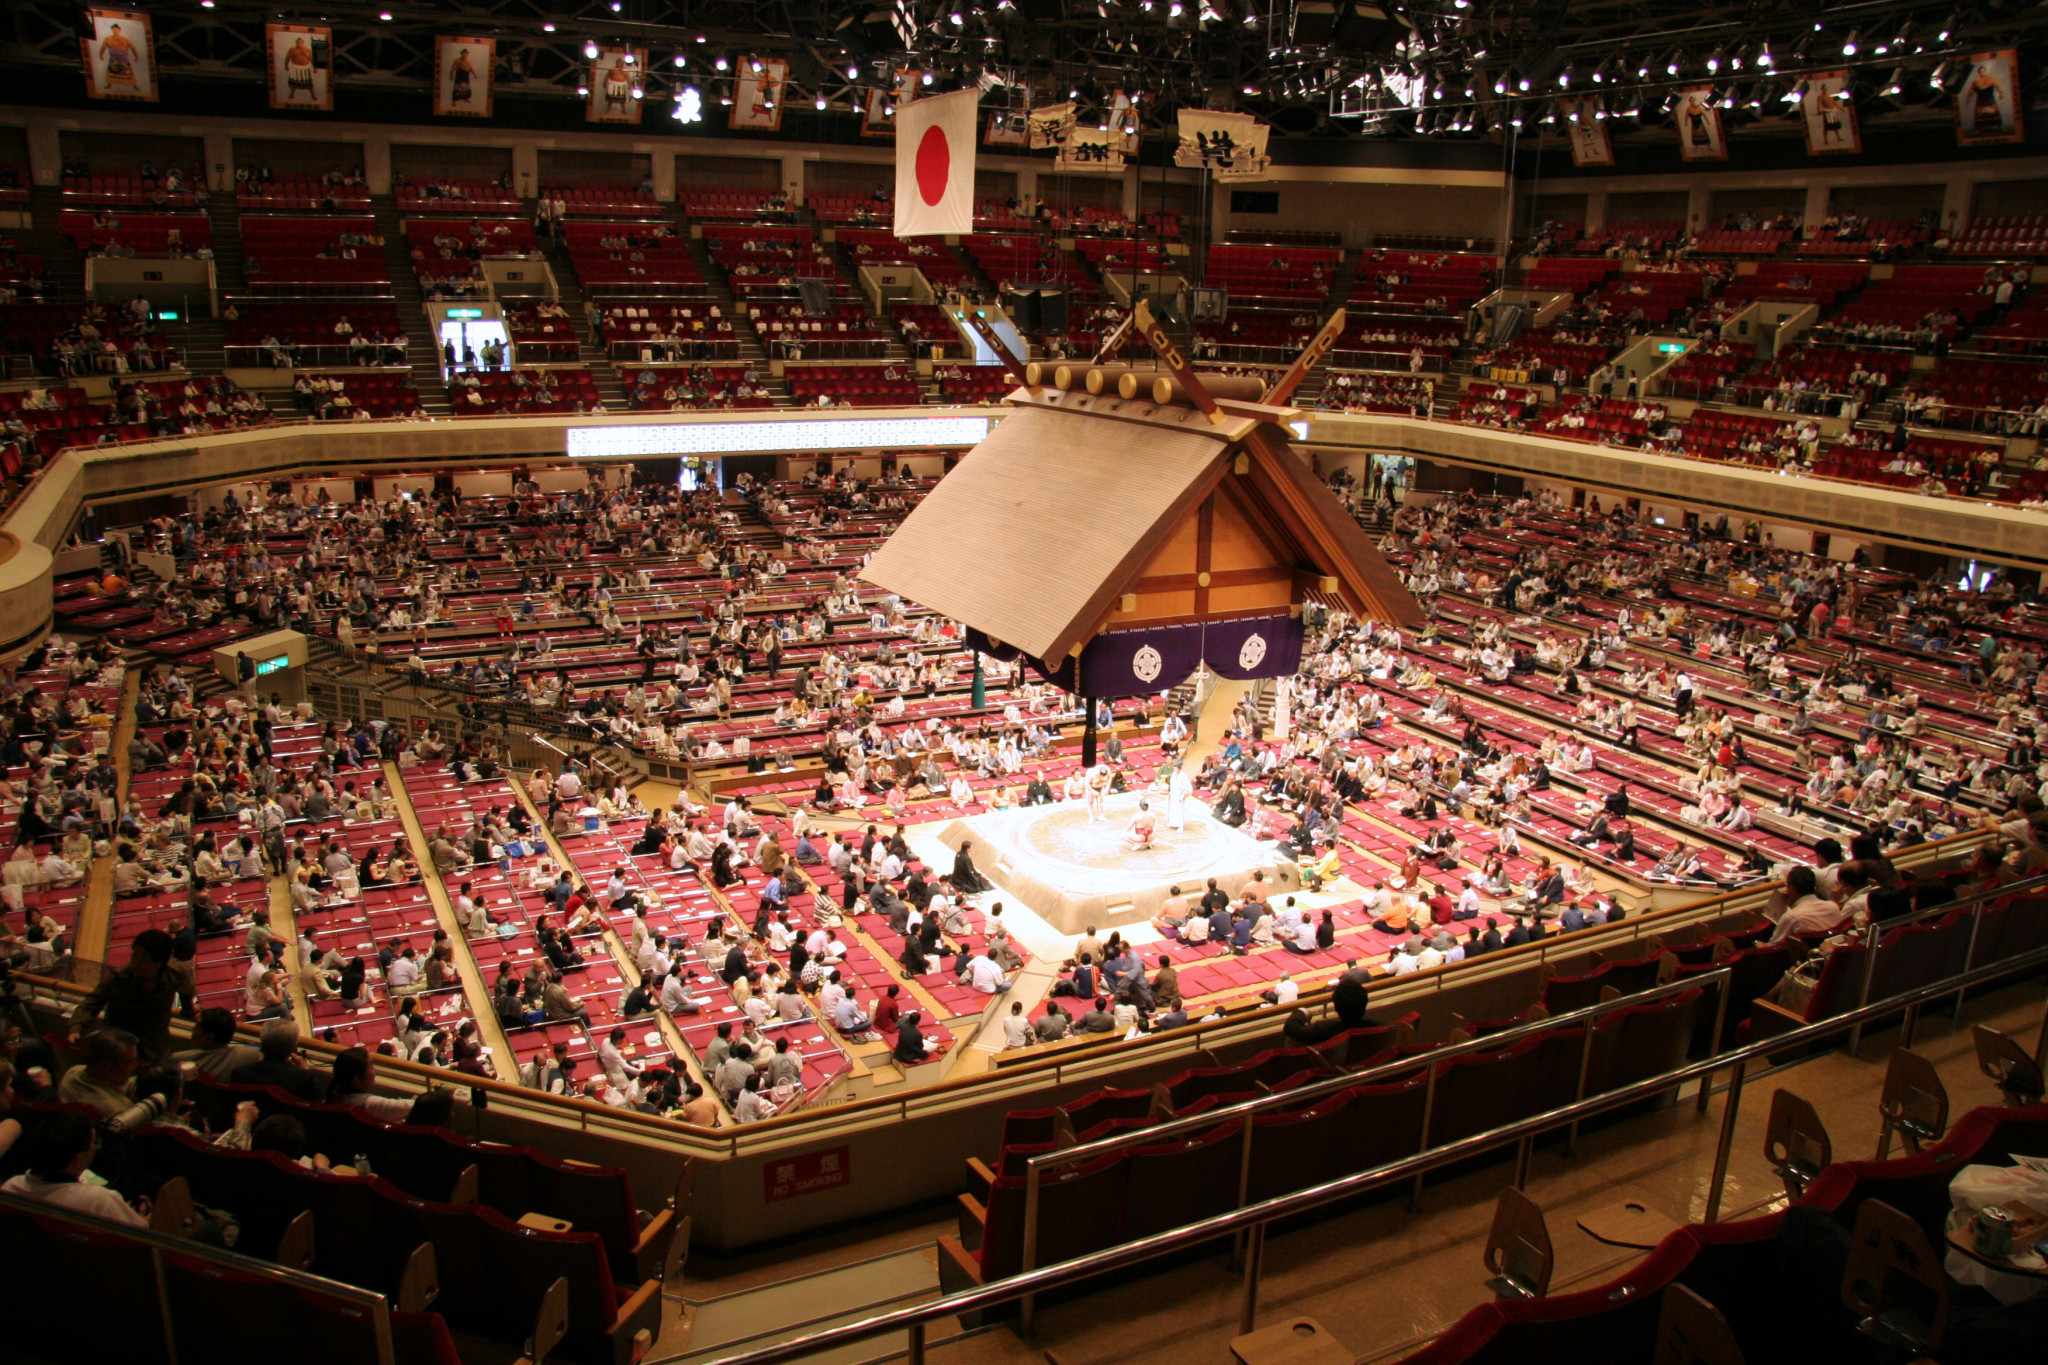 The sumo tournament will take place at Tokyo's Ryogoku Kokugikan Sumo Arena ©Wikipedia